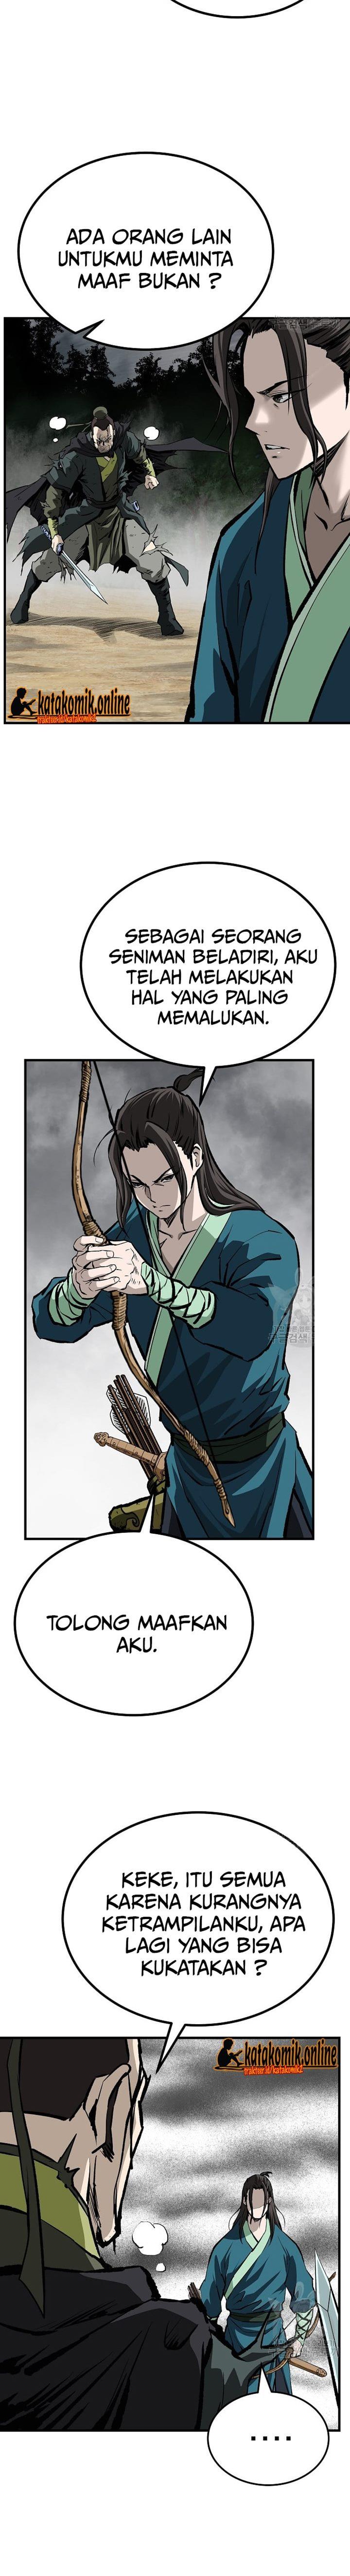 Archer Sword God: Descendants of the Archer Chapter 33